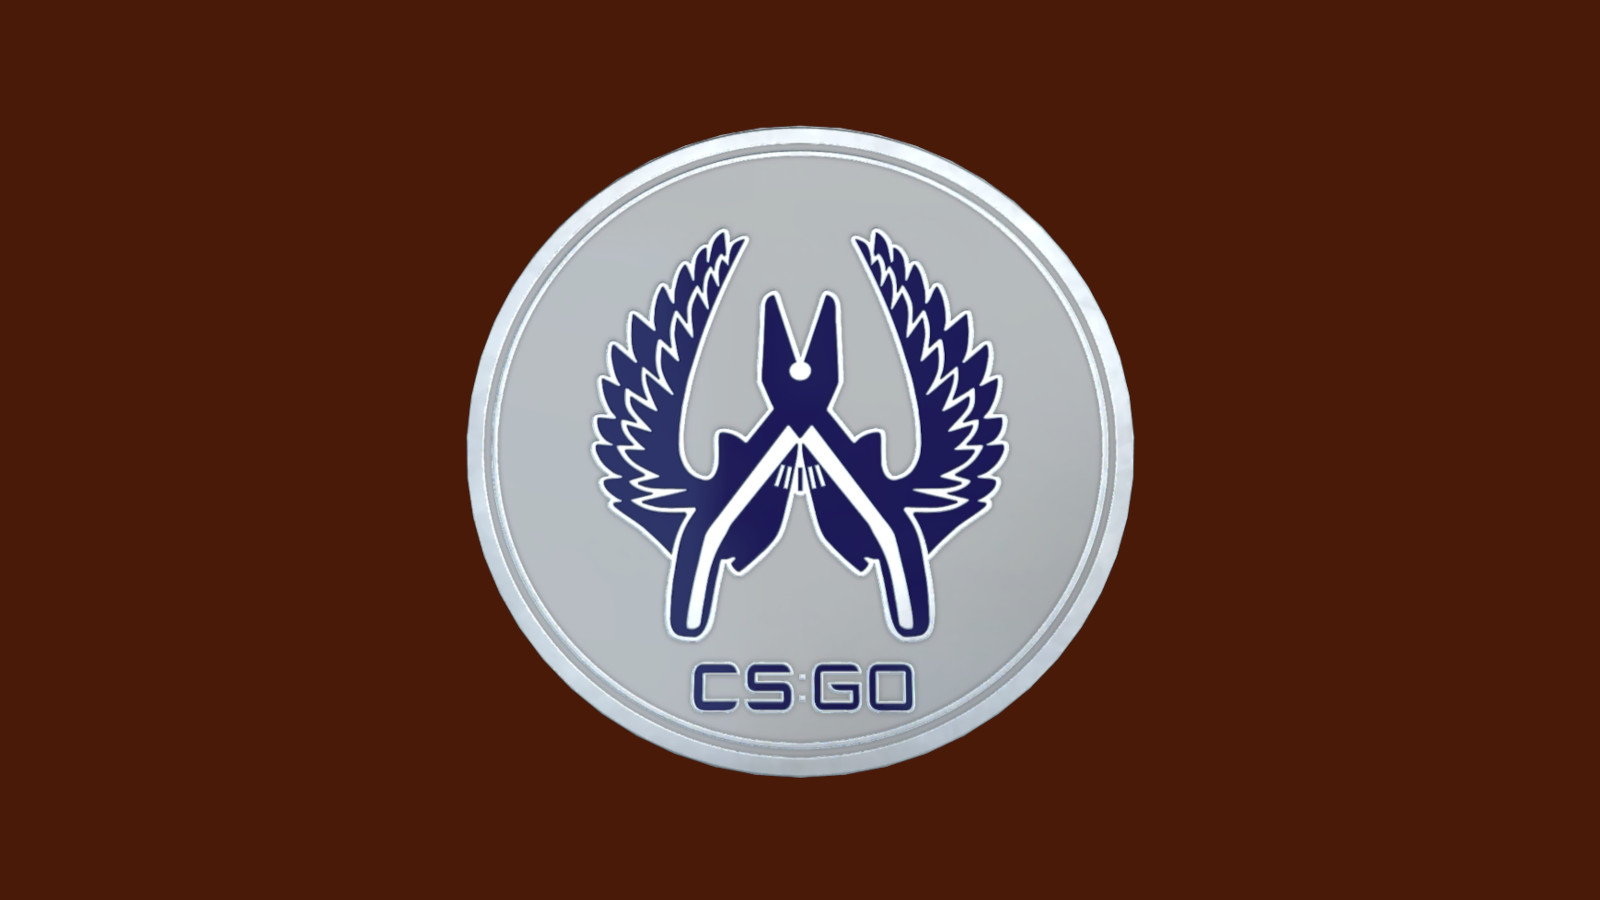 CS:GO - Series 3 - Guardian 3 Collectible Pin 225.98$